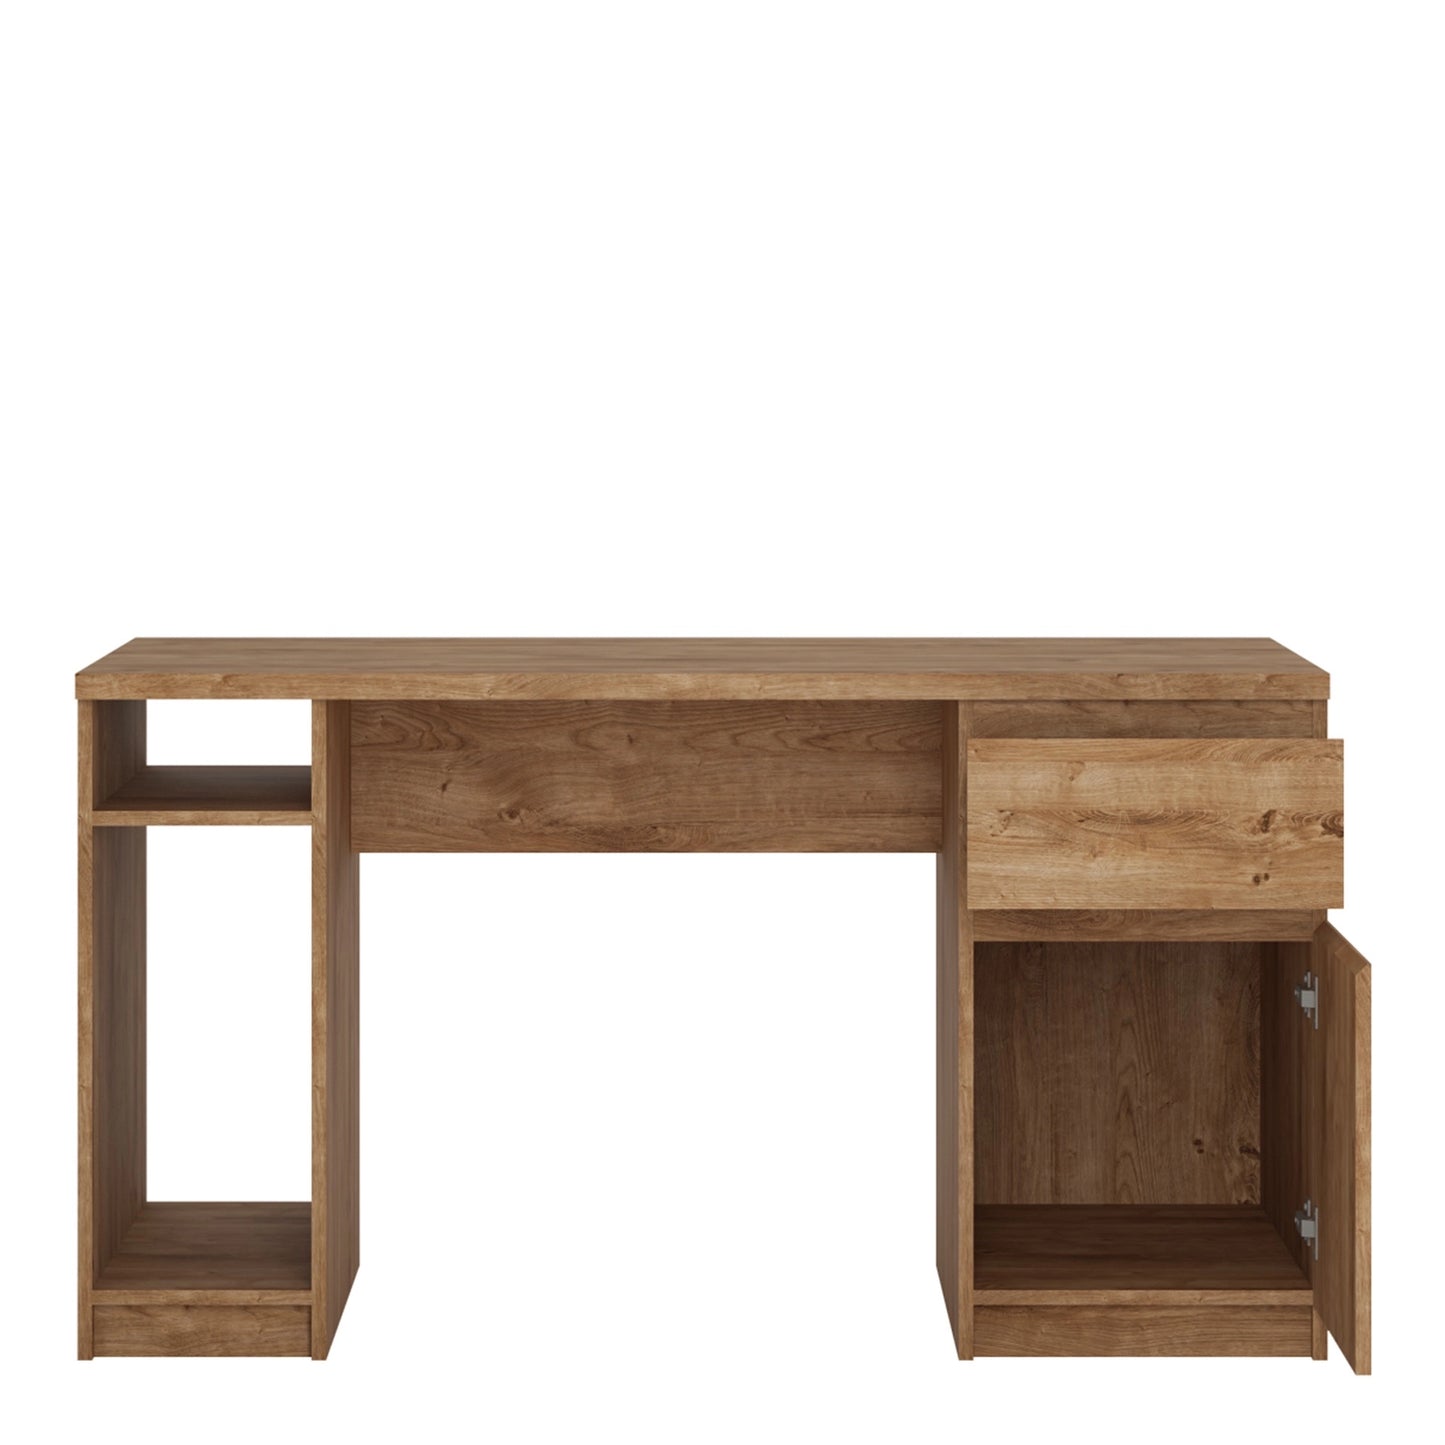 Furniture To Go Fribo 1 Door 1 Drawer Twin Pedestal Desk in Oak